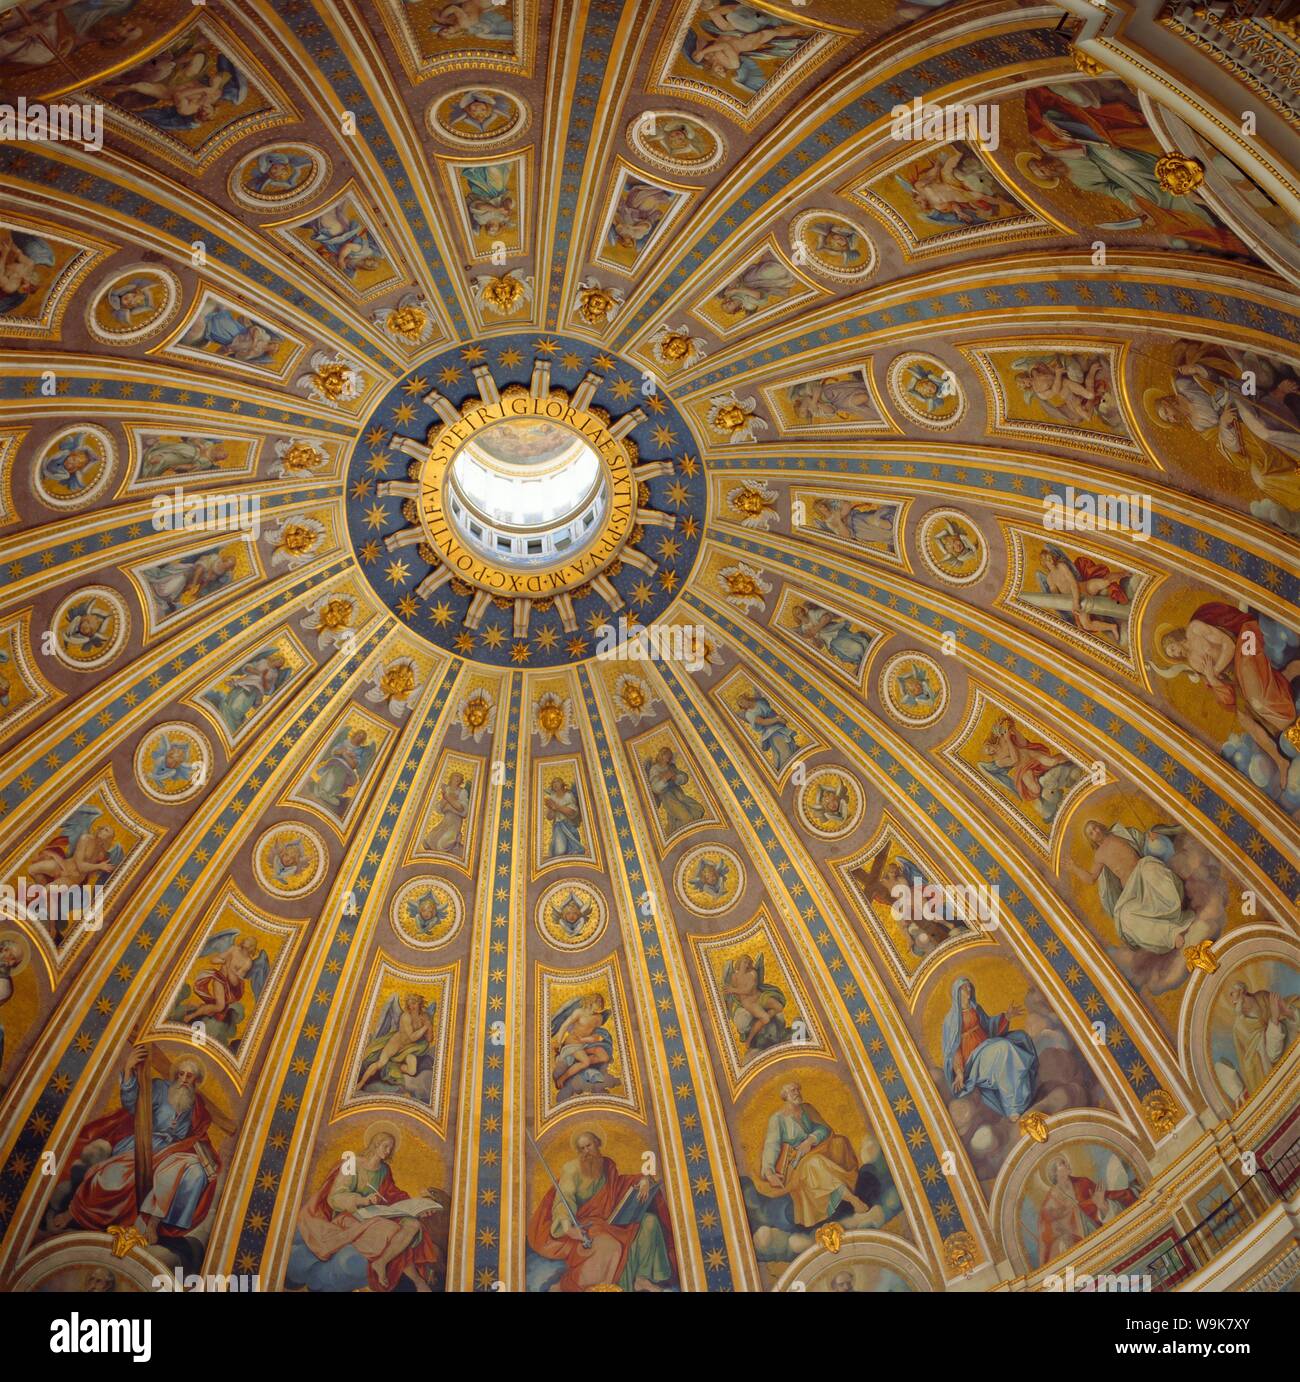 Ceiling, Interior of the Dome, St Peter's Basilica, Rome, Lazio, Italy Stock Photo